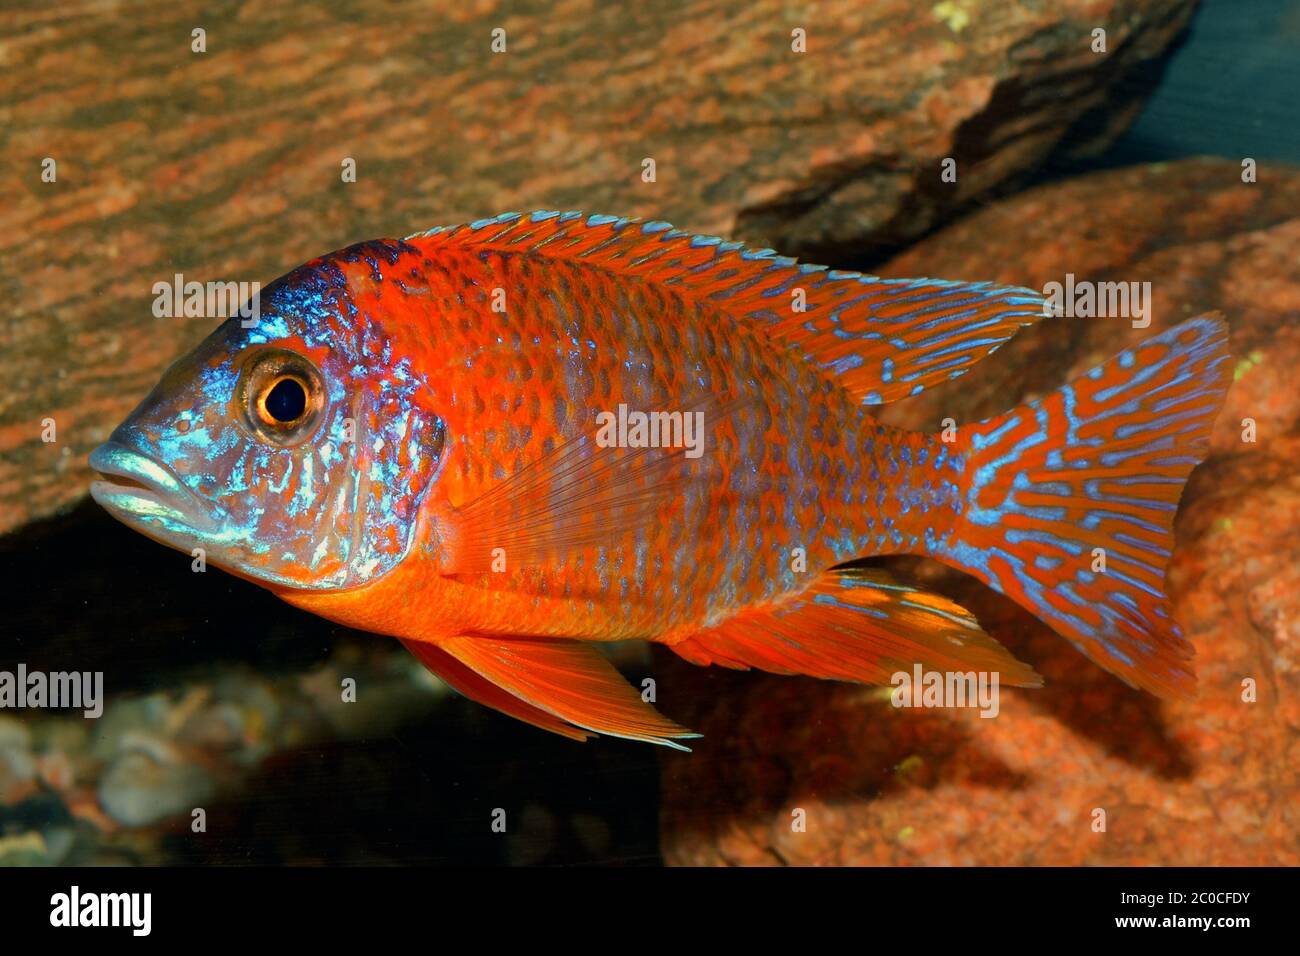 Aulonocara fish Stock Photo